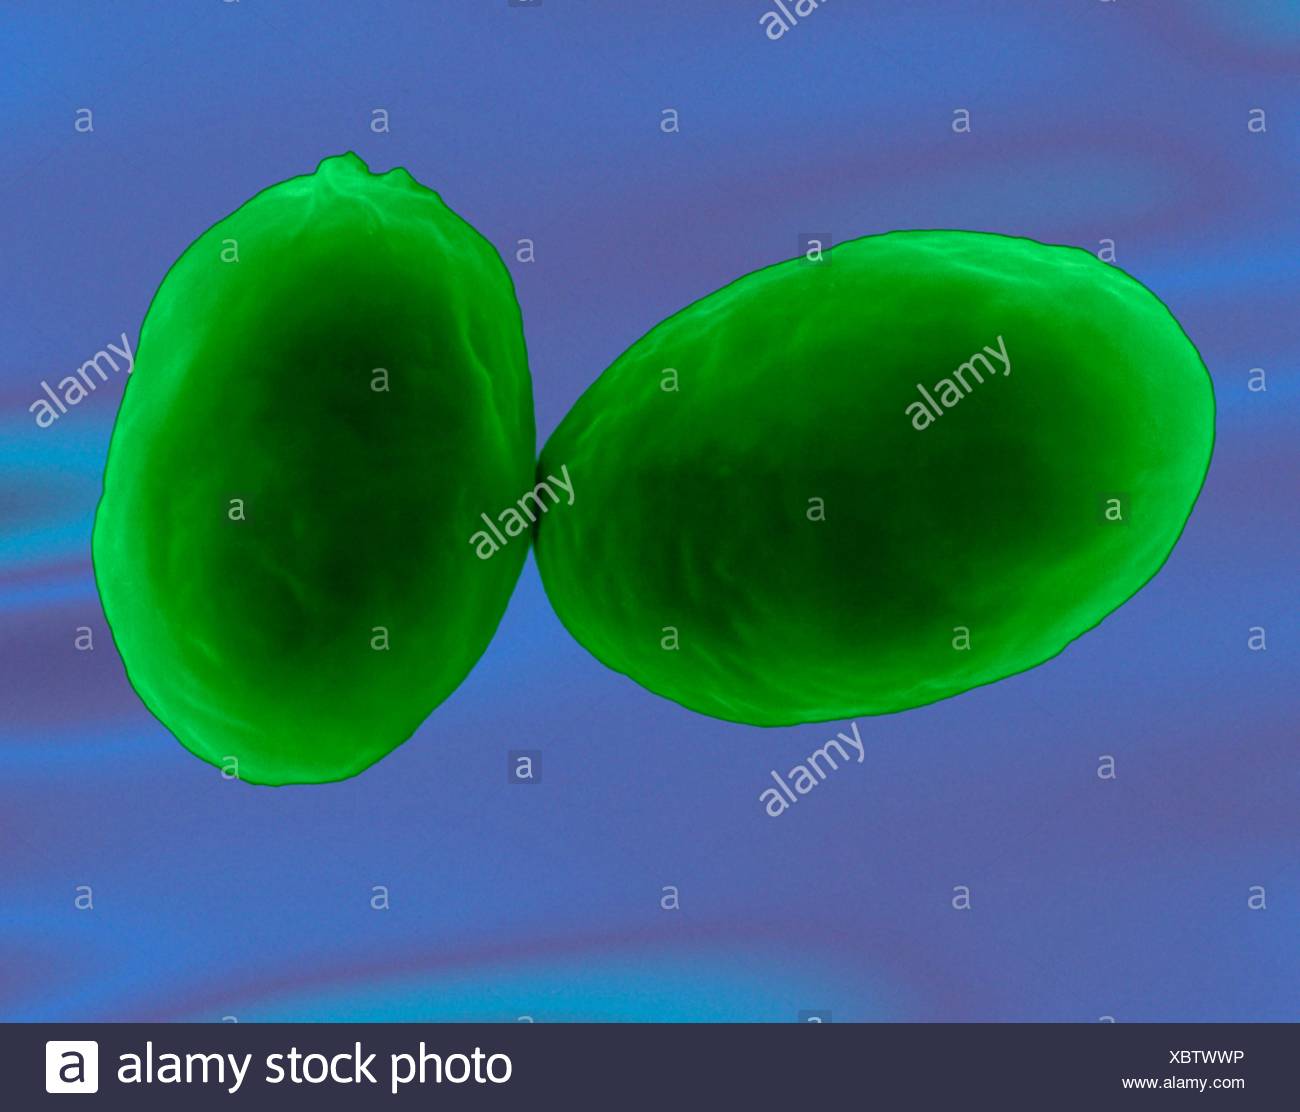 human disease caused by protozoa pdf